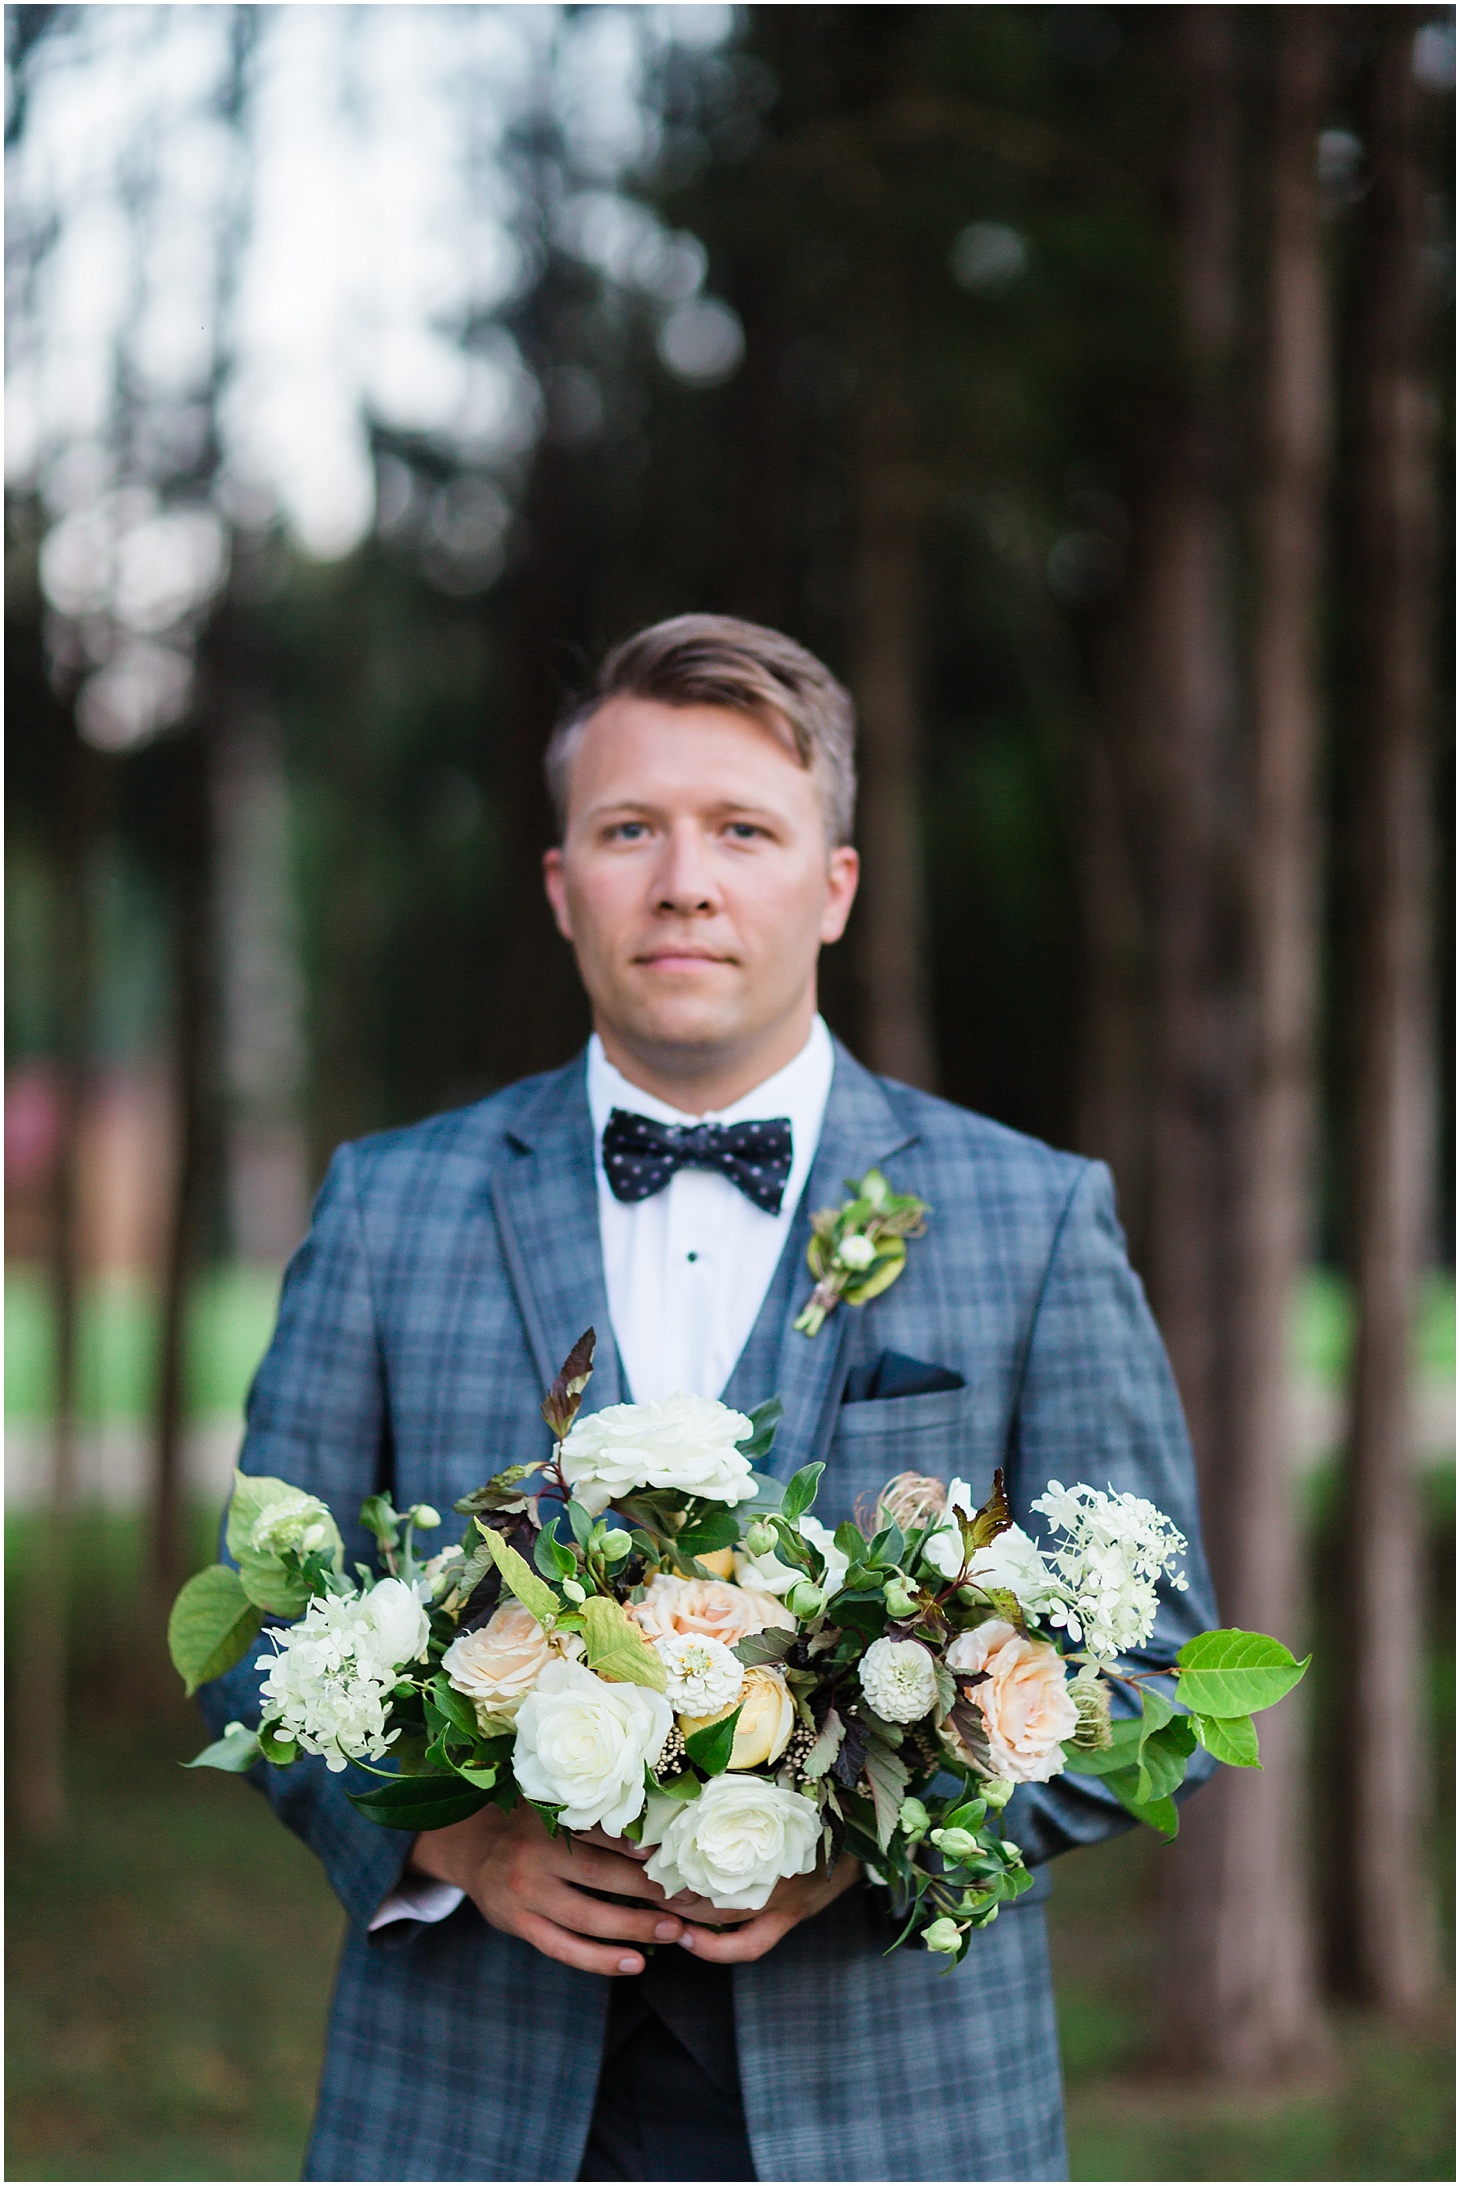 Groom Portrait with Wedding Bouquet | Equestrian-Inspired Fall Wedding Editorial at Poplar Springs Manor | Sarah Bradshaw Photography